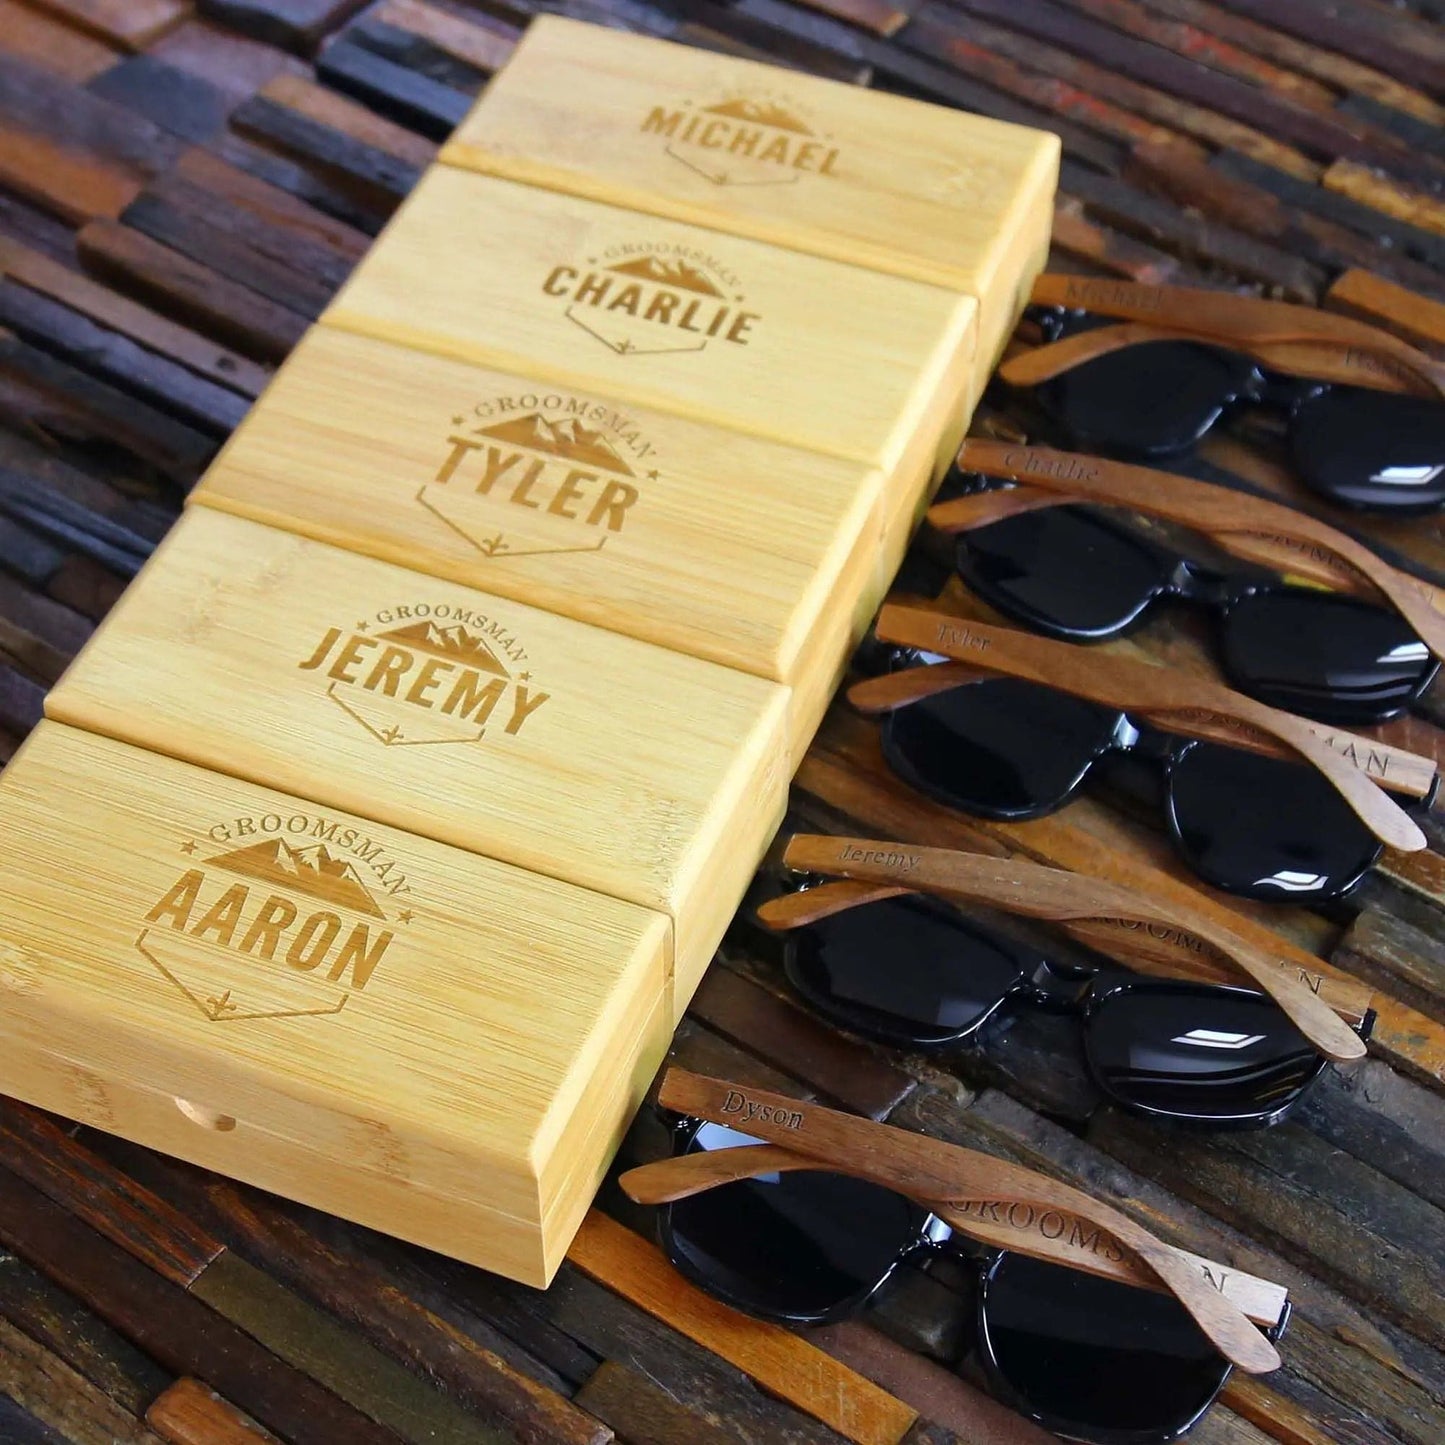 Custom Engraved Black Walnut Wood Sunglasses - Groomsmen sunglasses UniqueGiftProposal